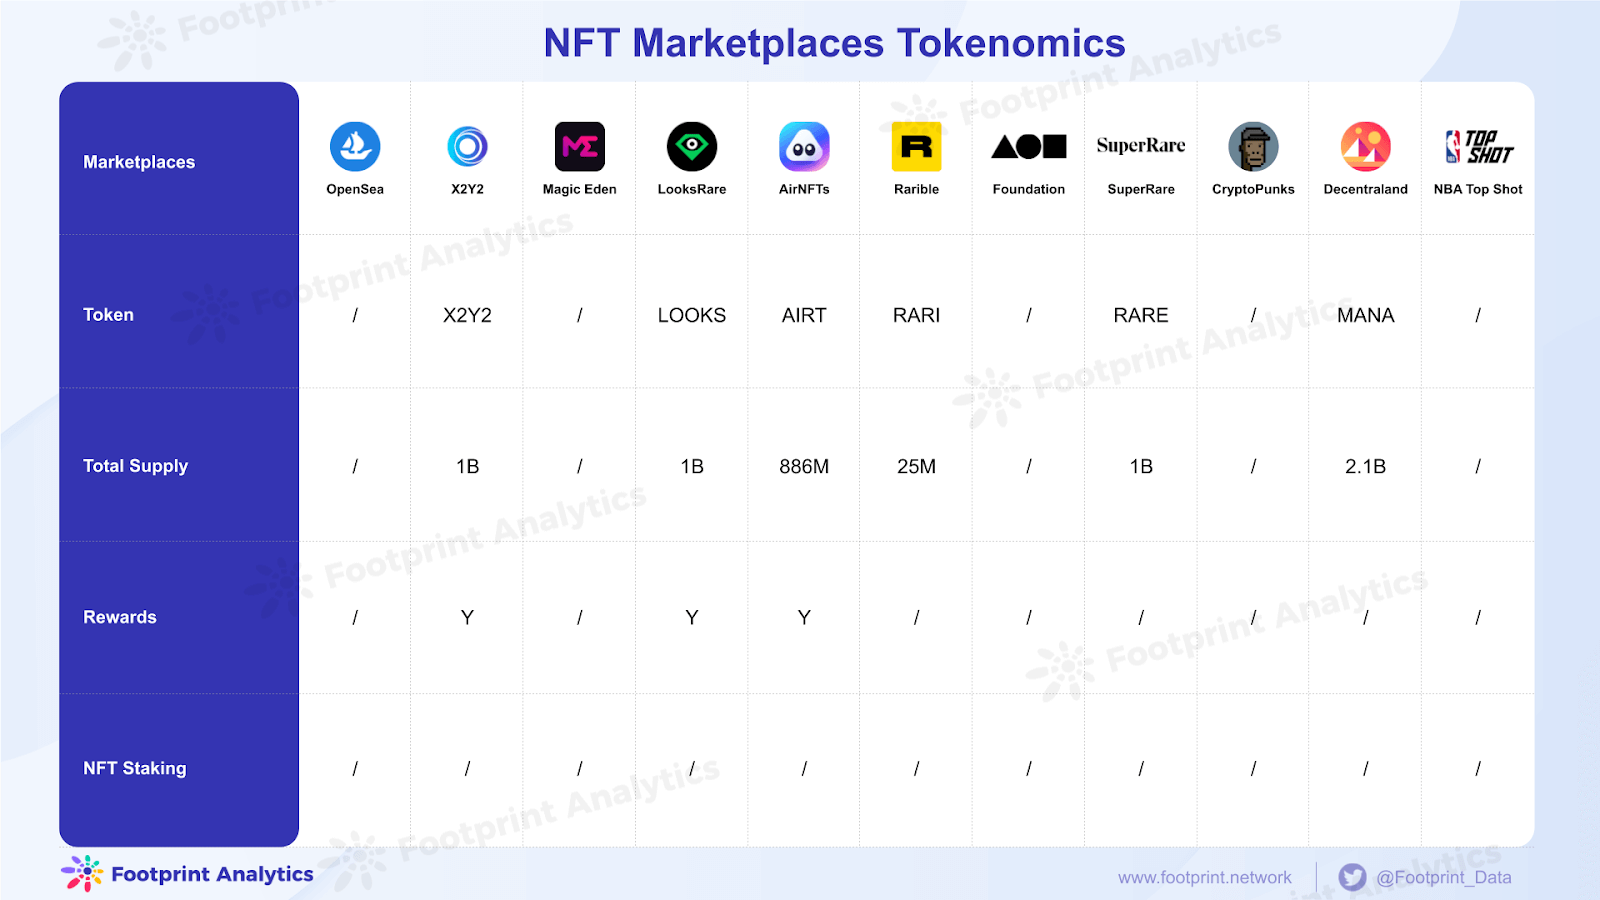 Footprint Analysis - NFT Marketplace Tokennomics